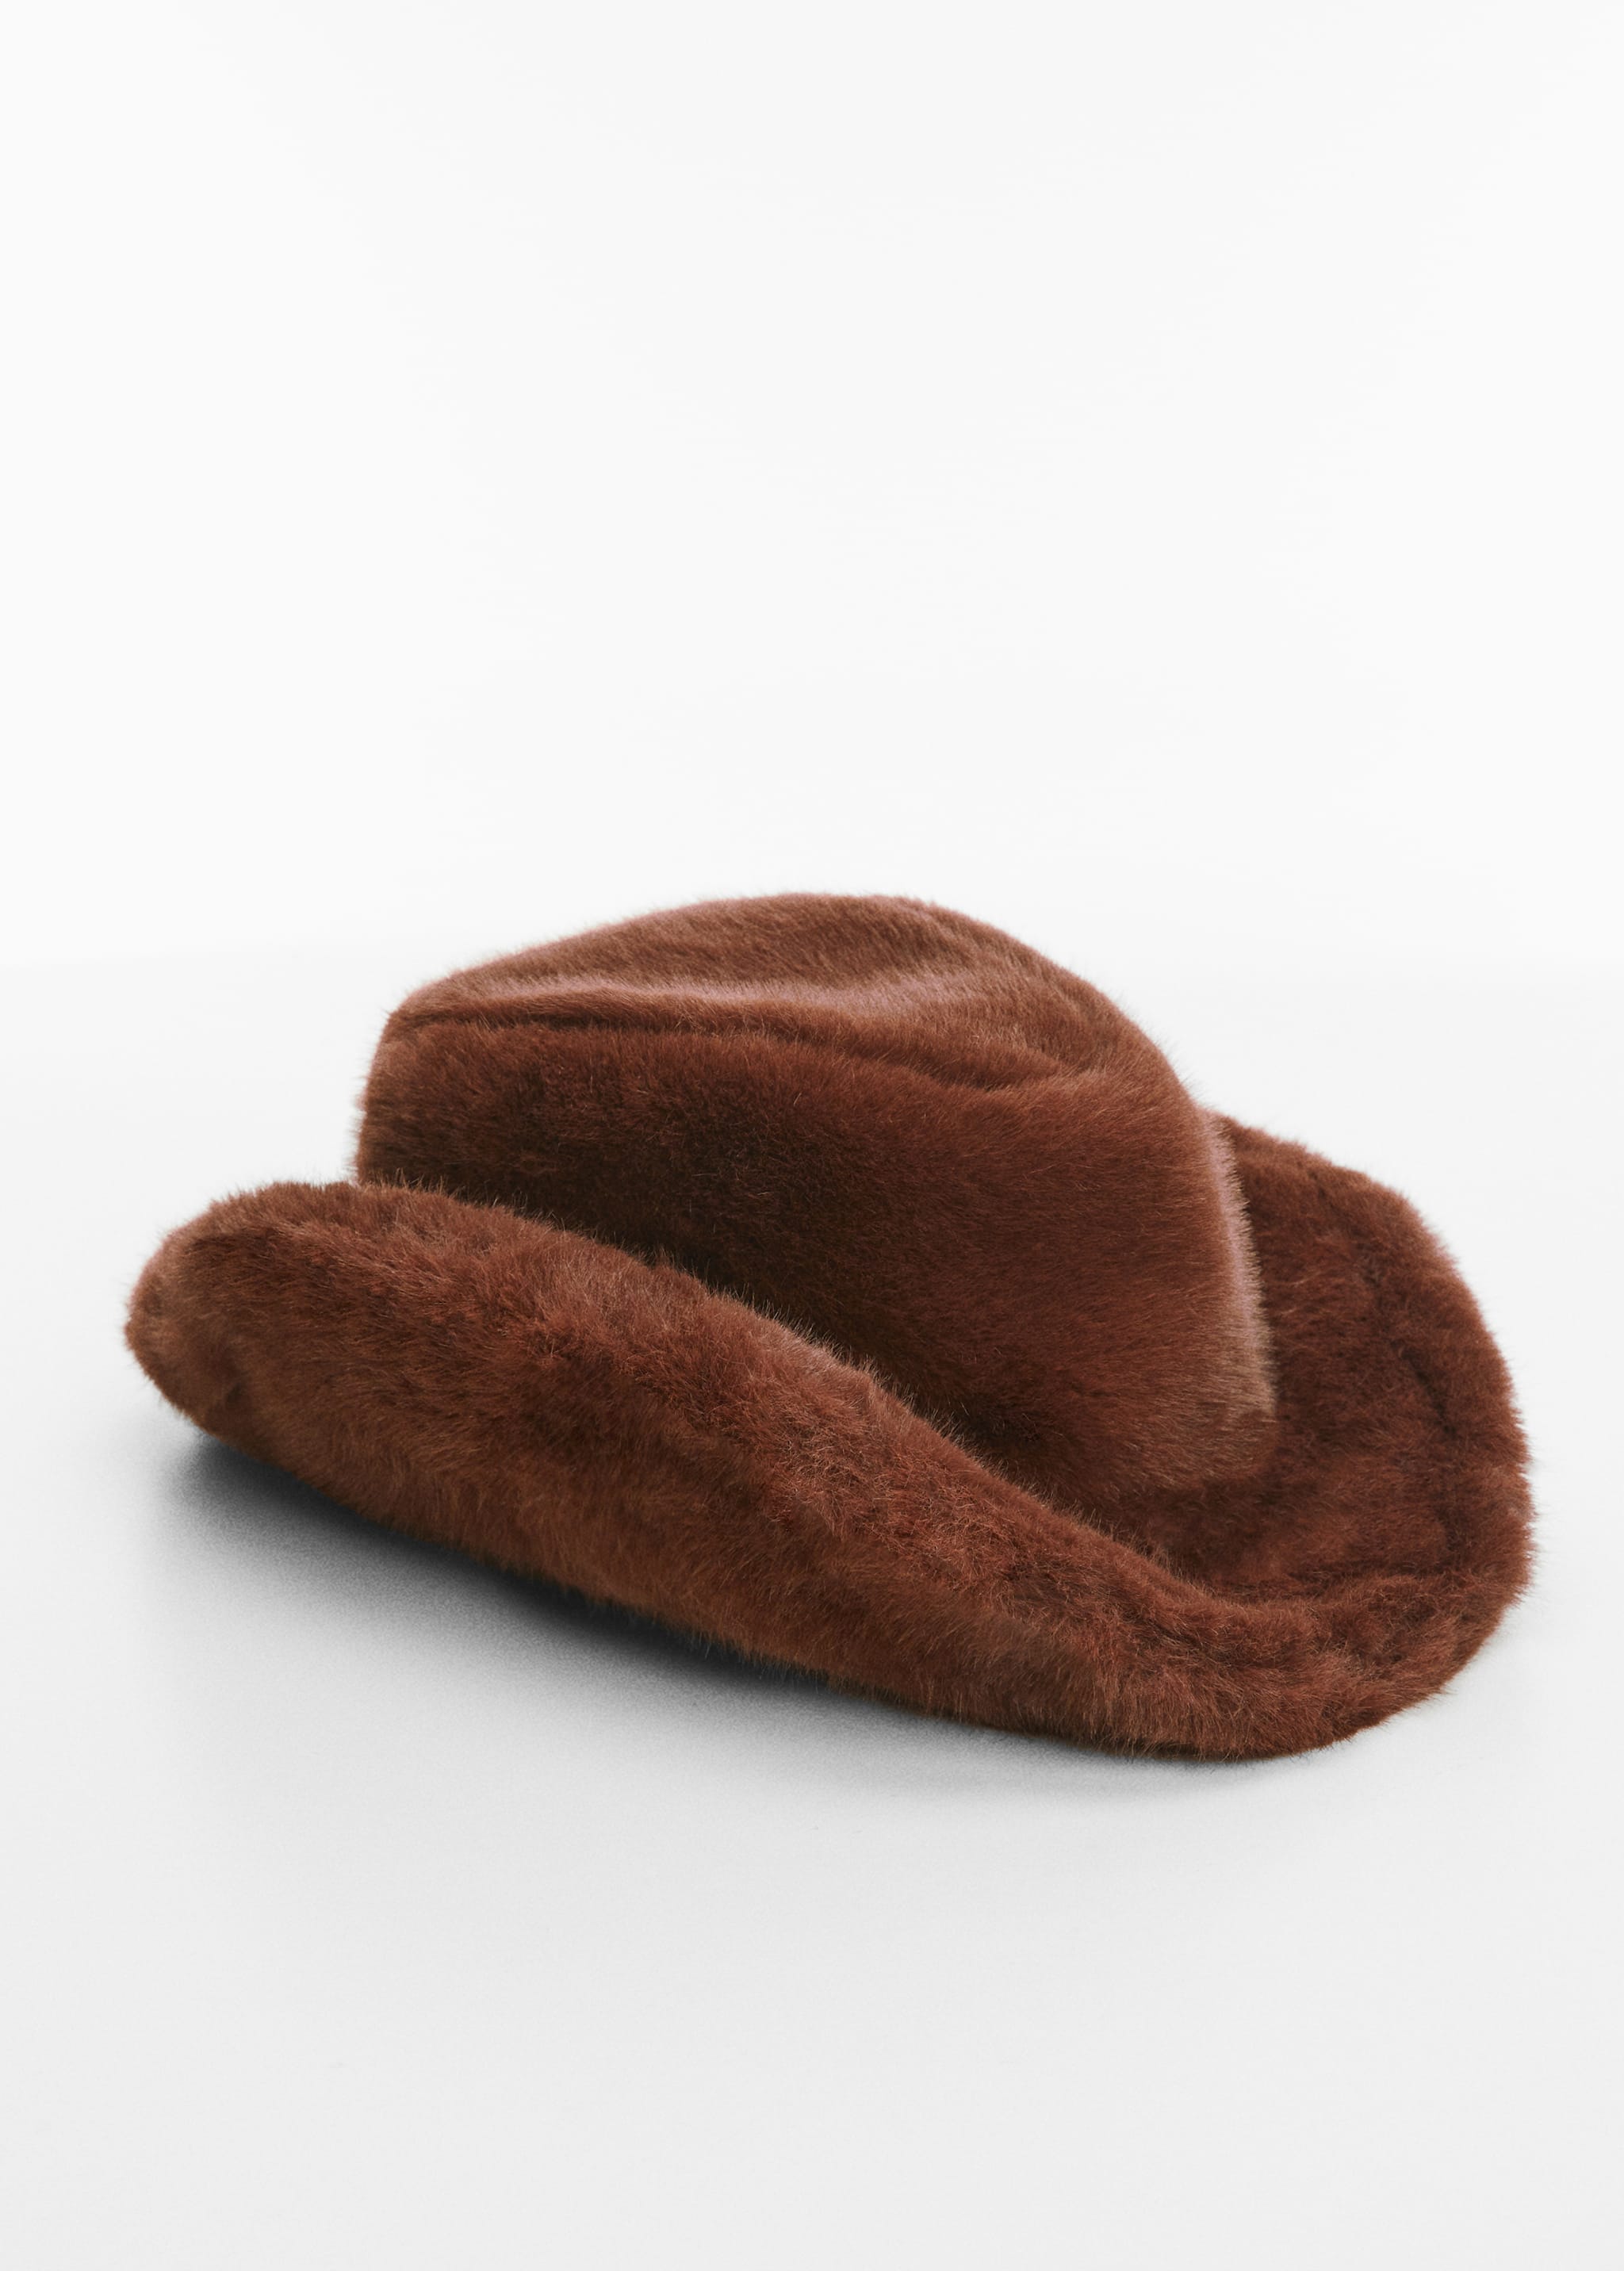 Fur-effect cowboy hat - Medium plane